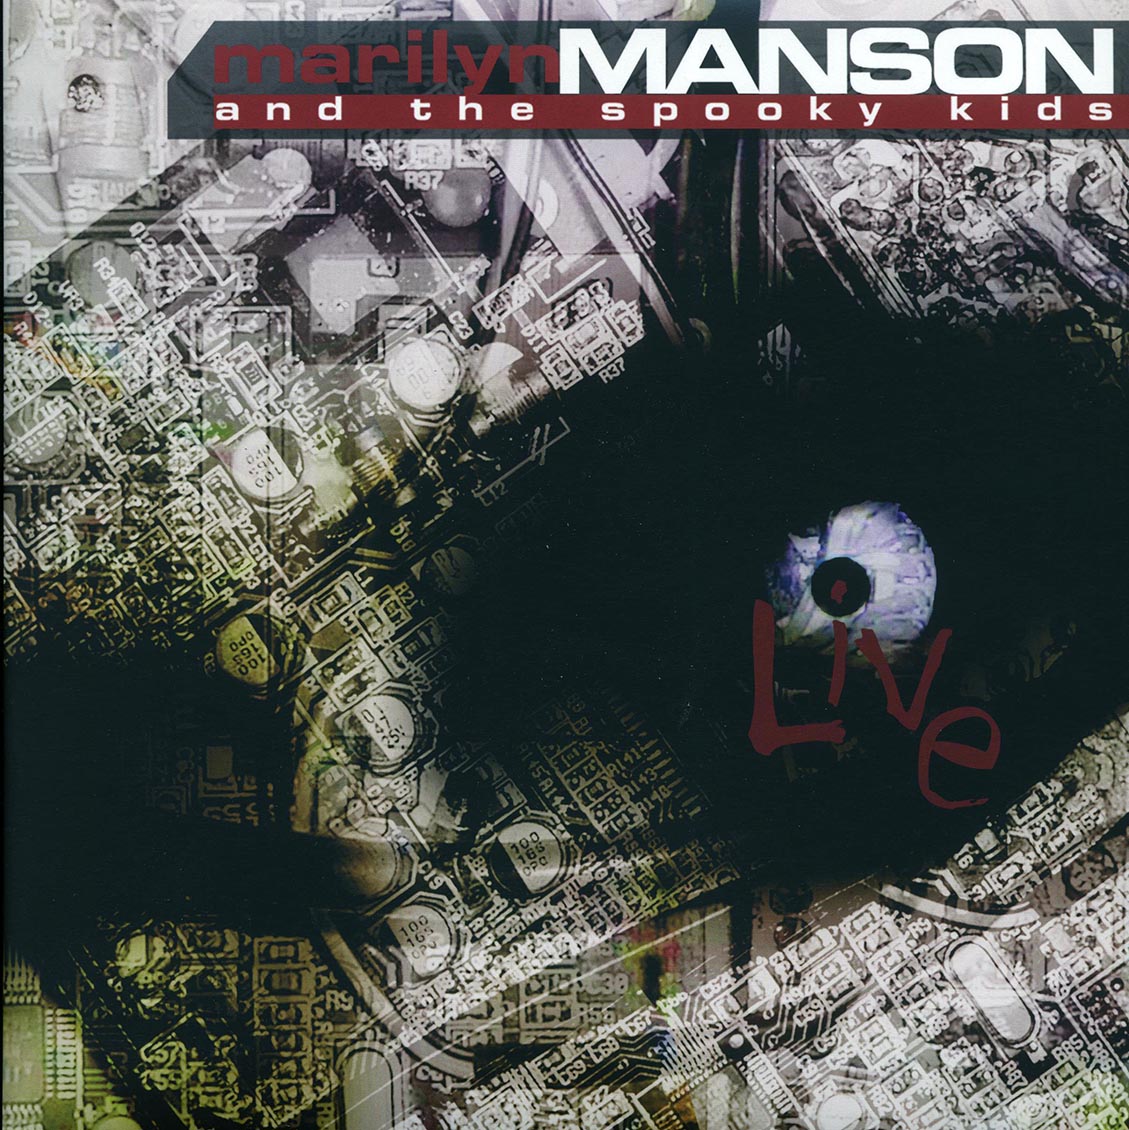 Marilyn Manson & The Spooky Kids - Live: Fort Lauderdale, Florida 1990 (ltd. ed.) (colored vinyl) - Vinyl LP